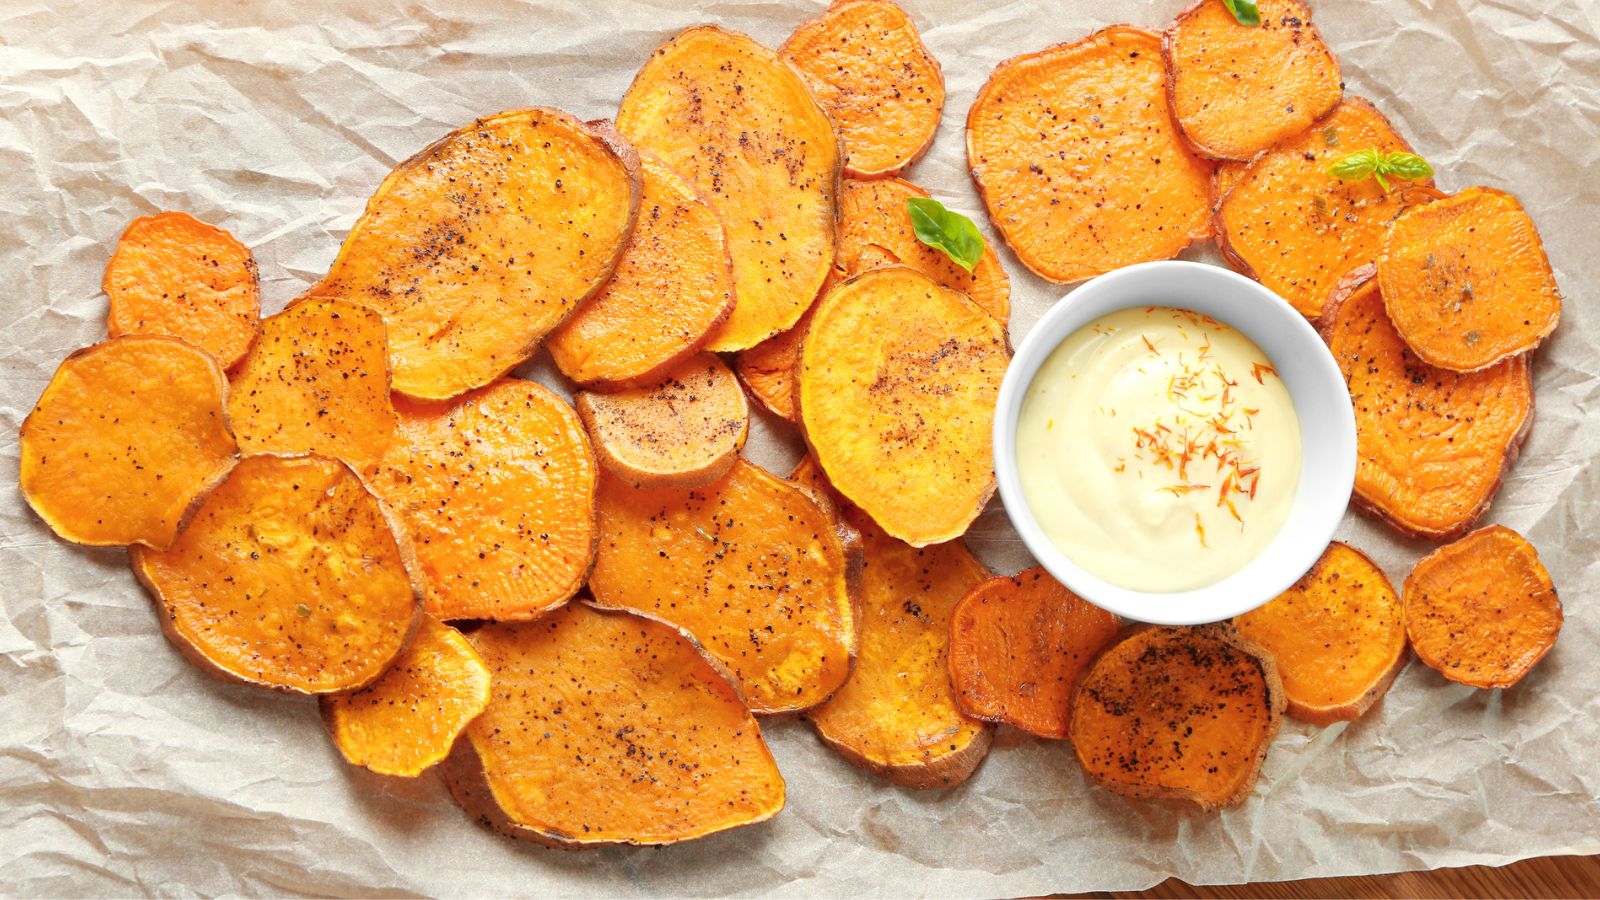 22 Sweet Potato Recipes to Make Forever